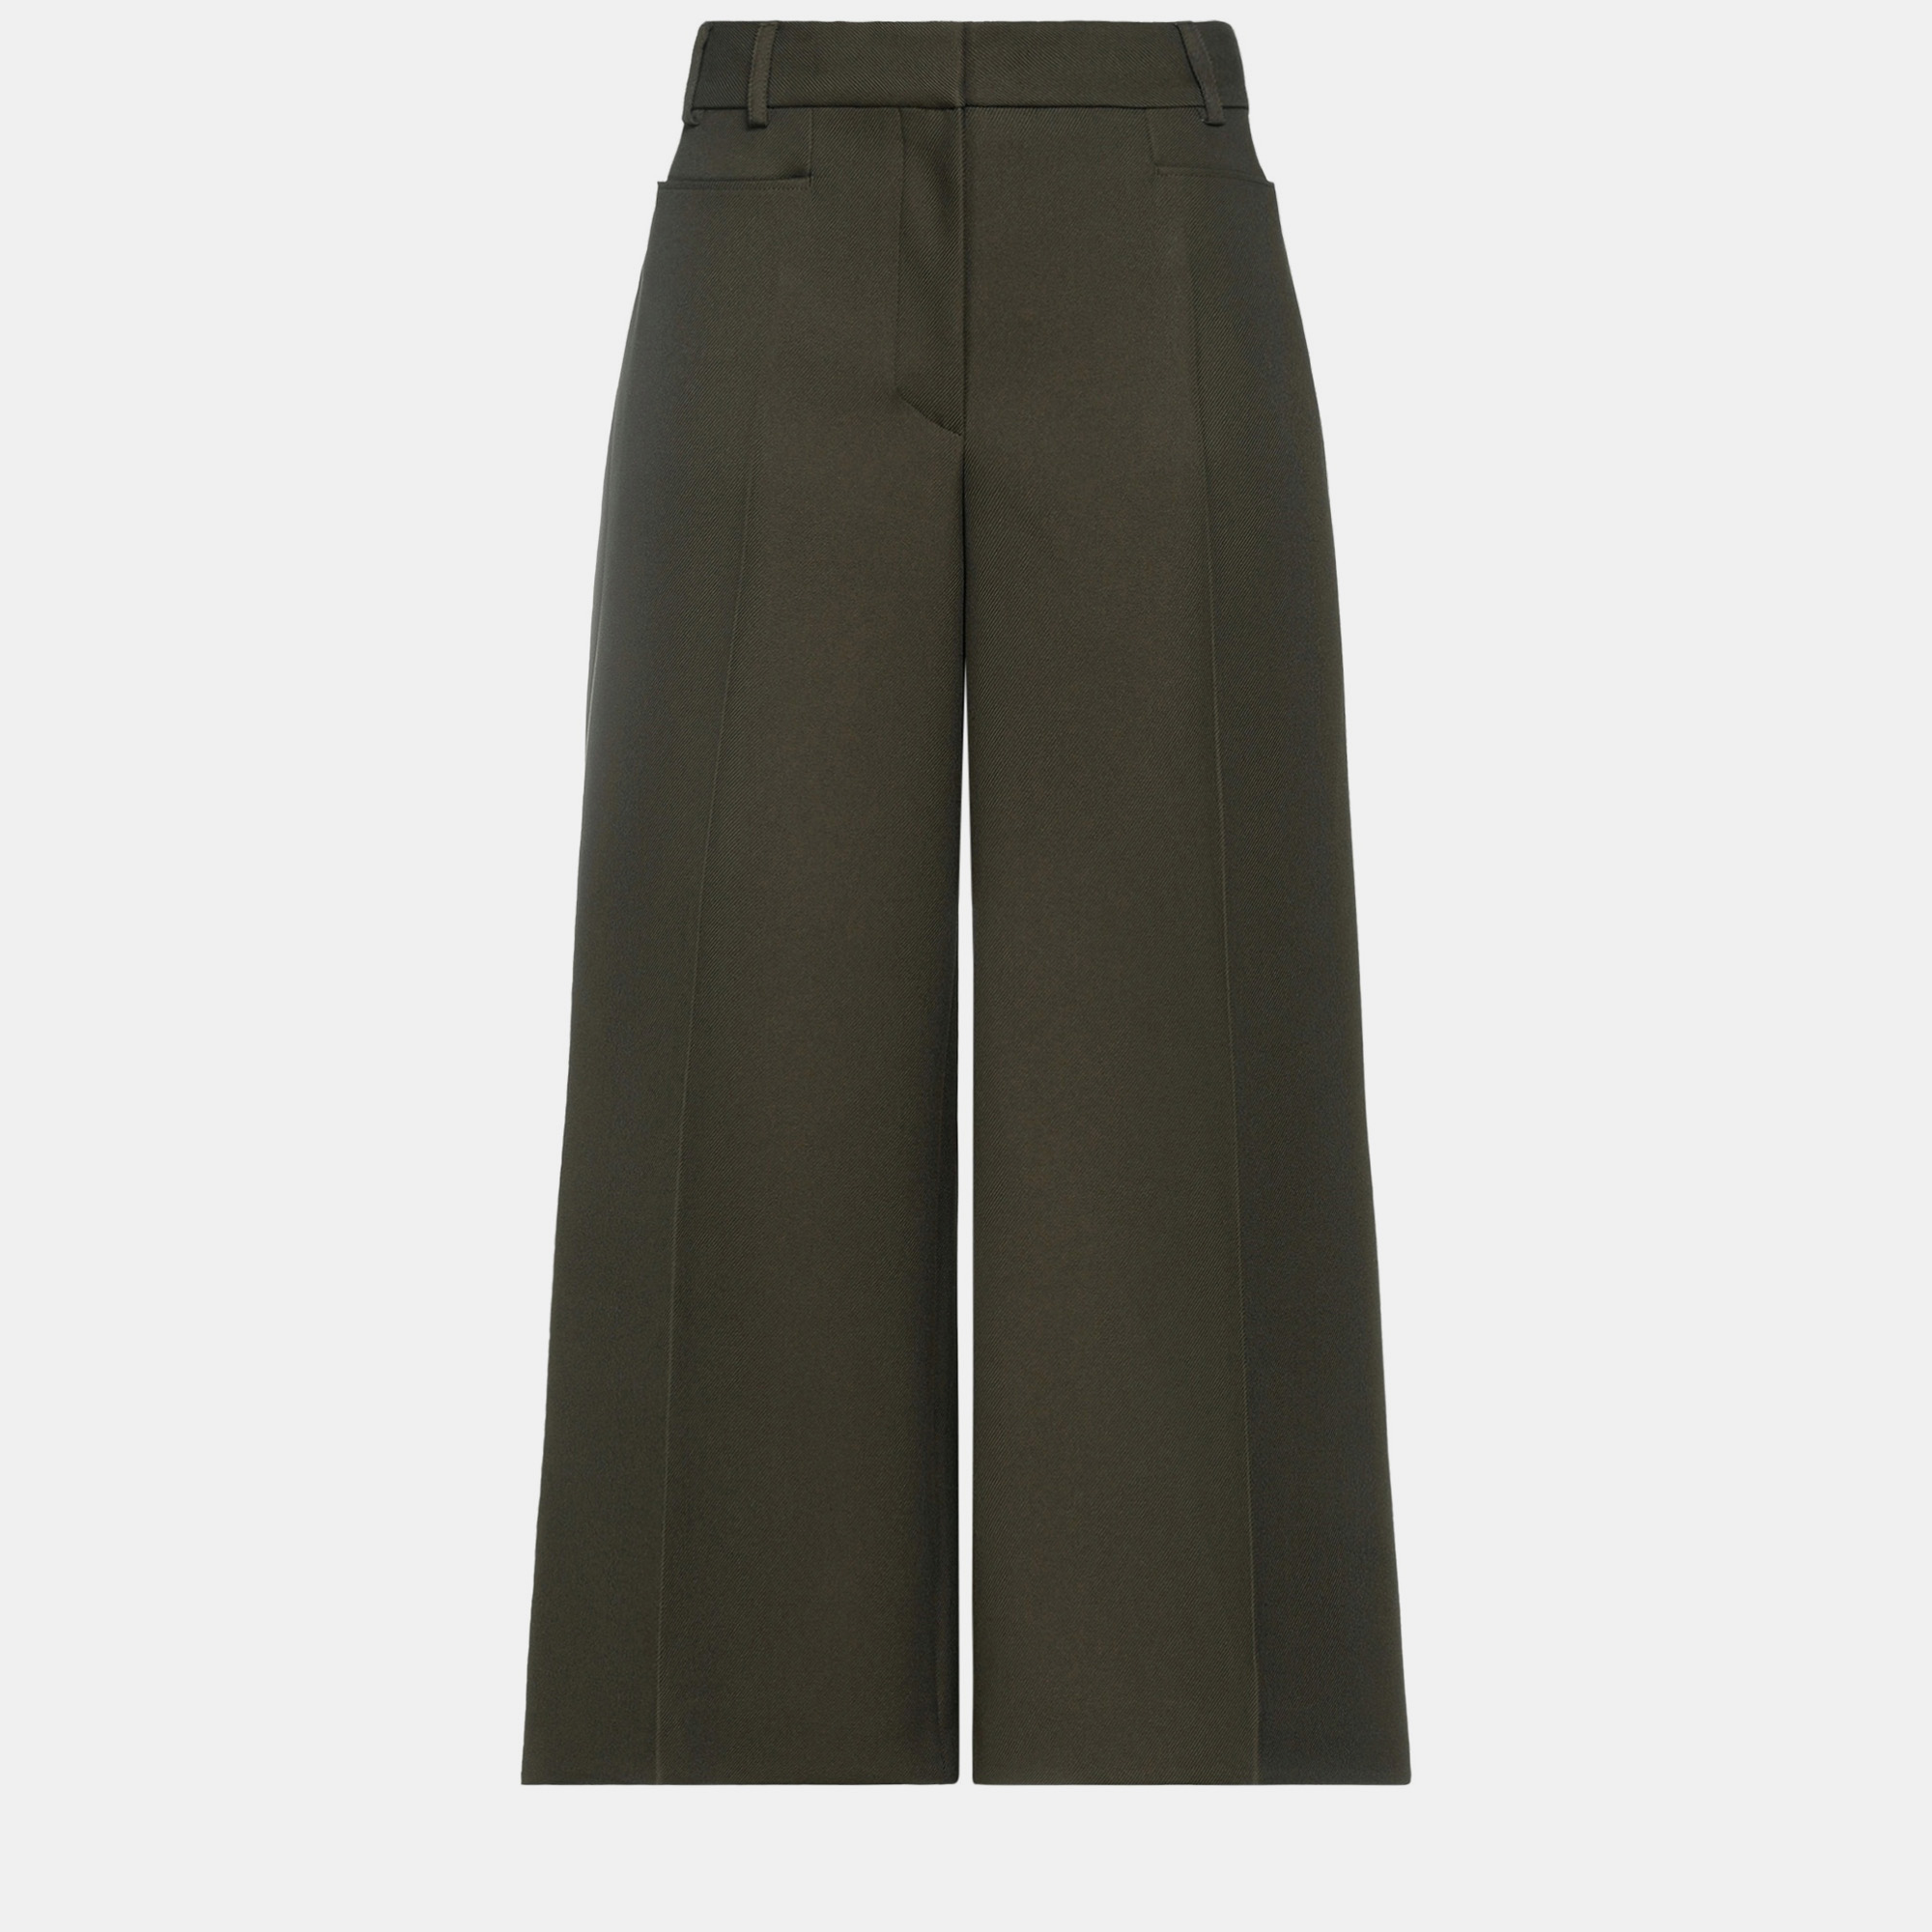 Stella mccartney polyester pants 40